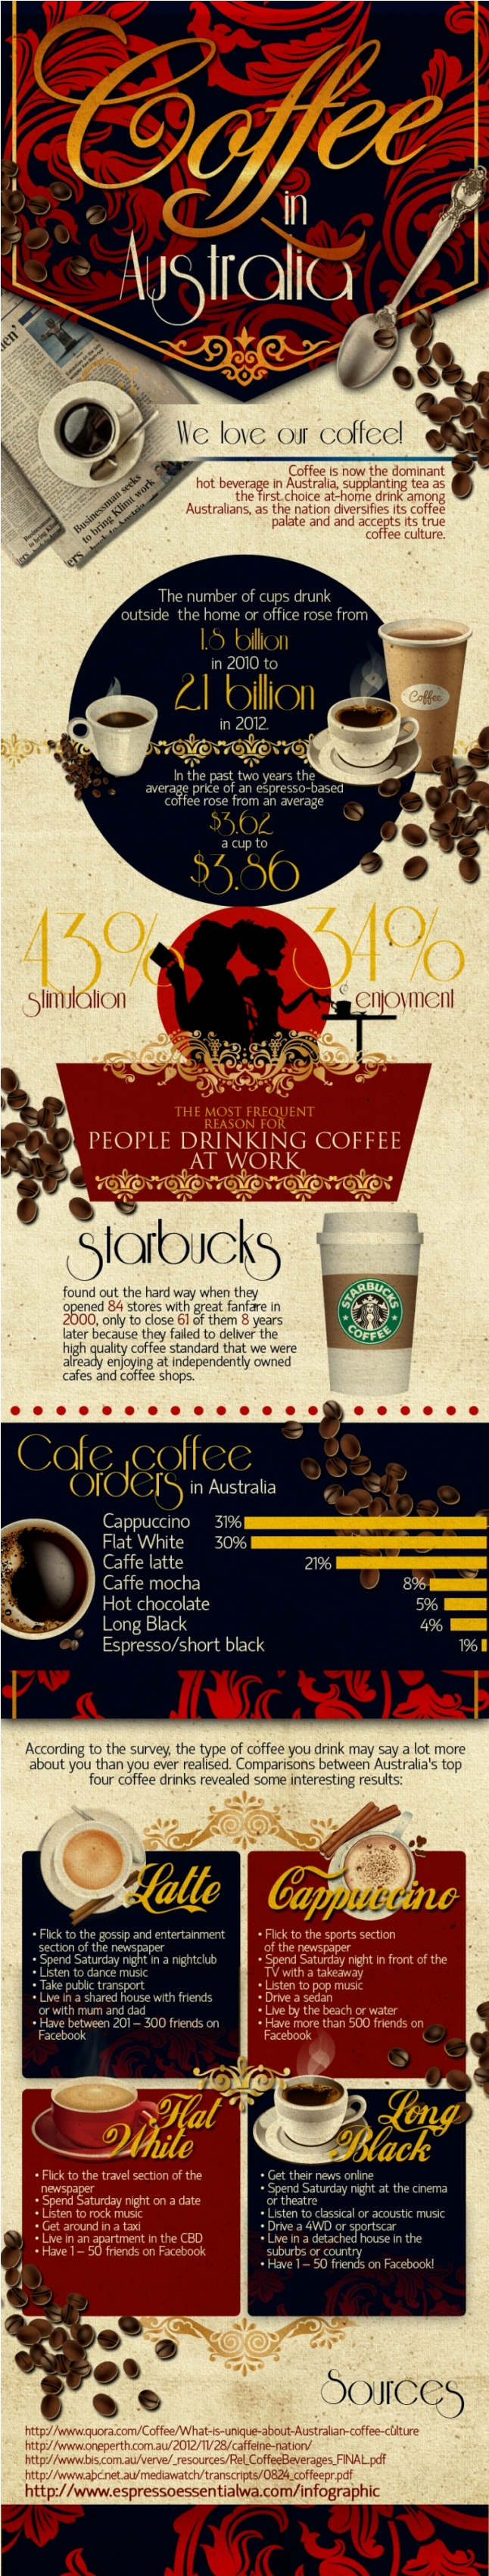 Coffee in Australia